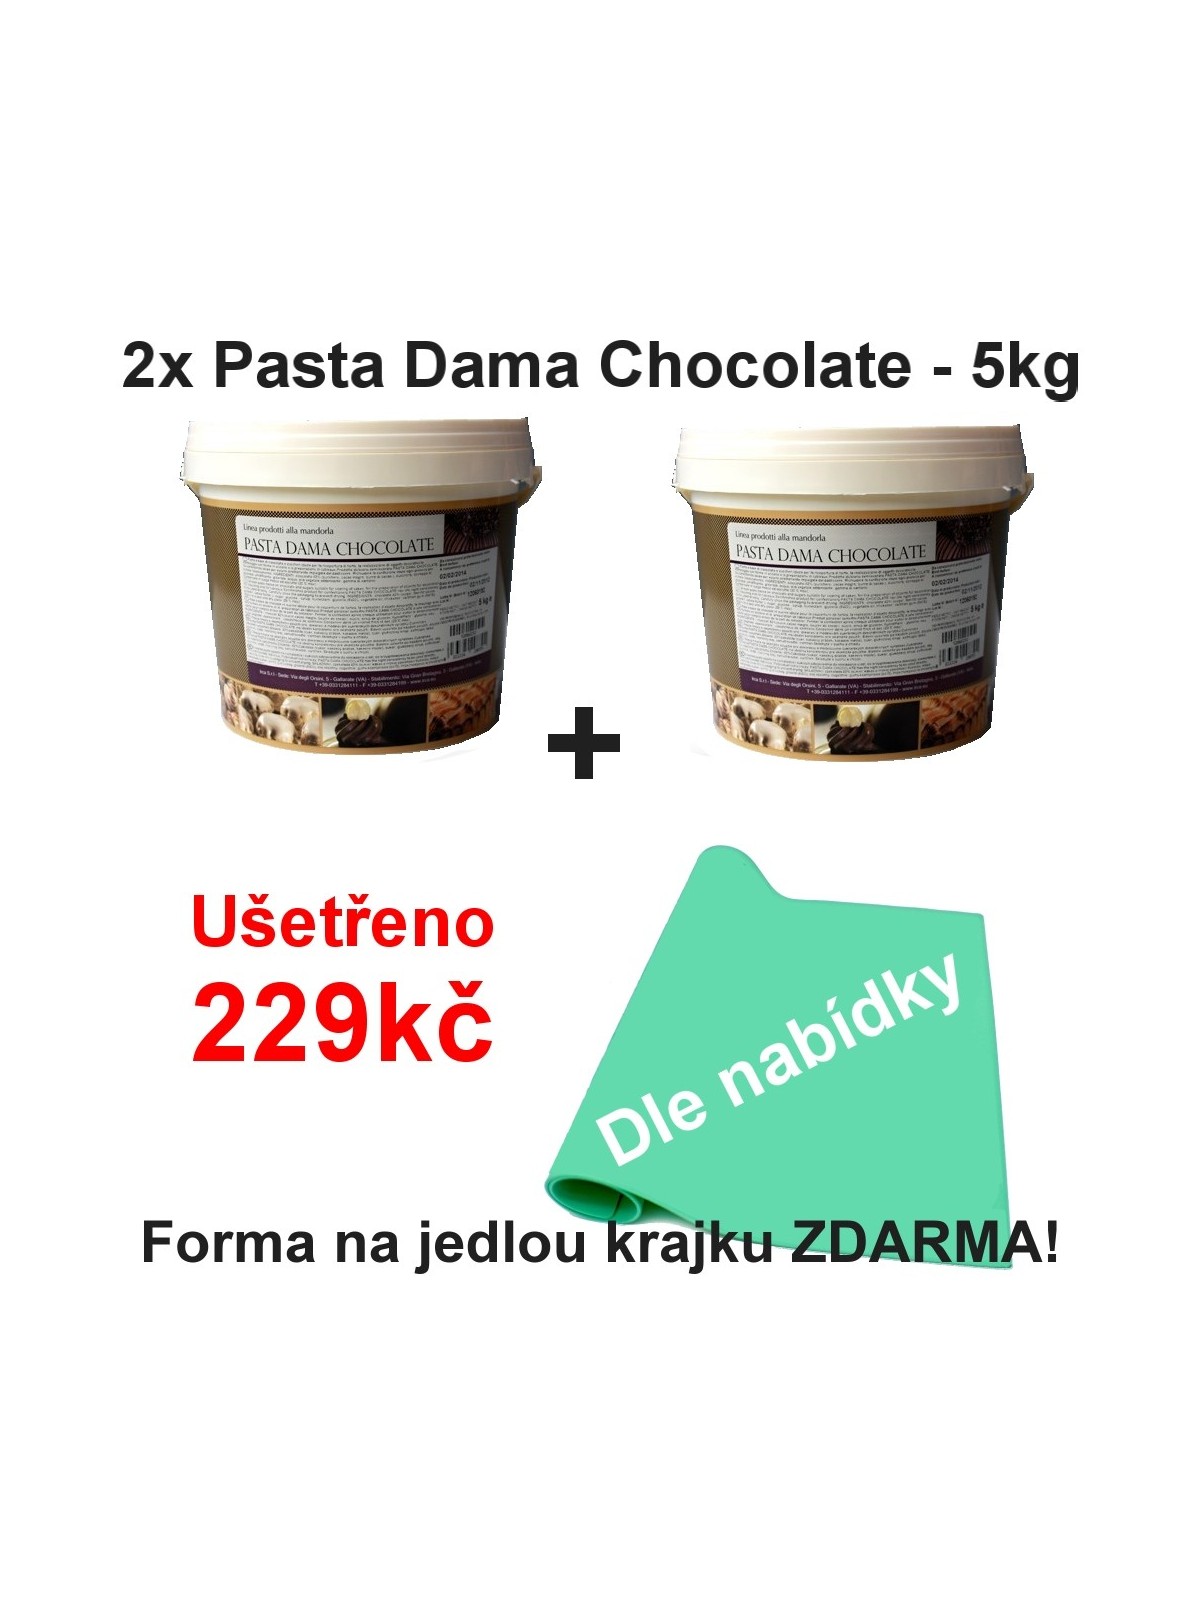 2x Pasta Dama Chocolate - 5kg + siliconmatt for edible lace